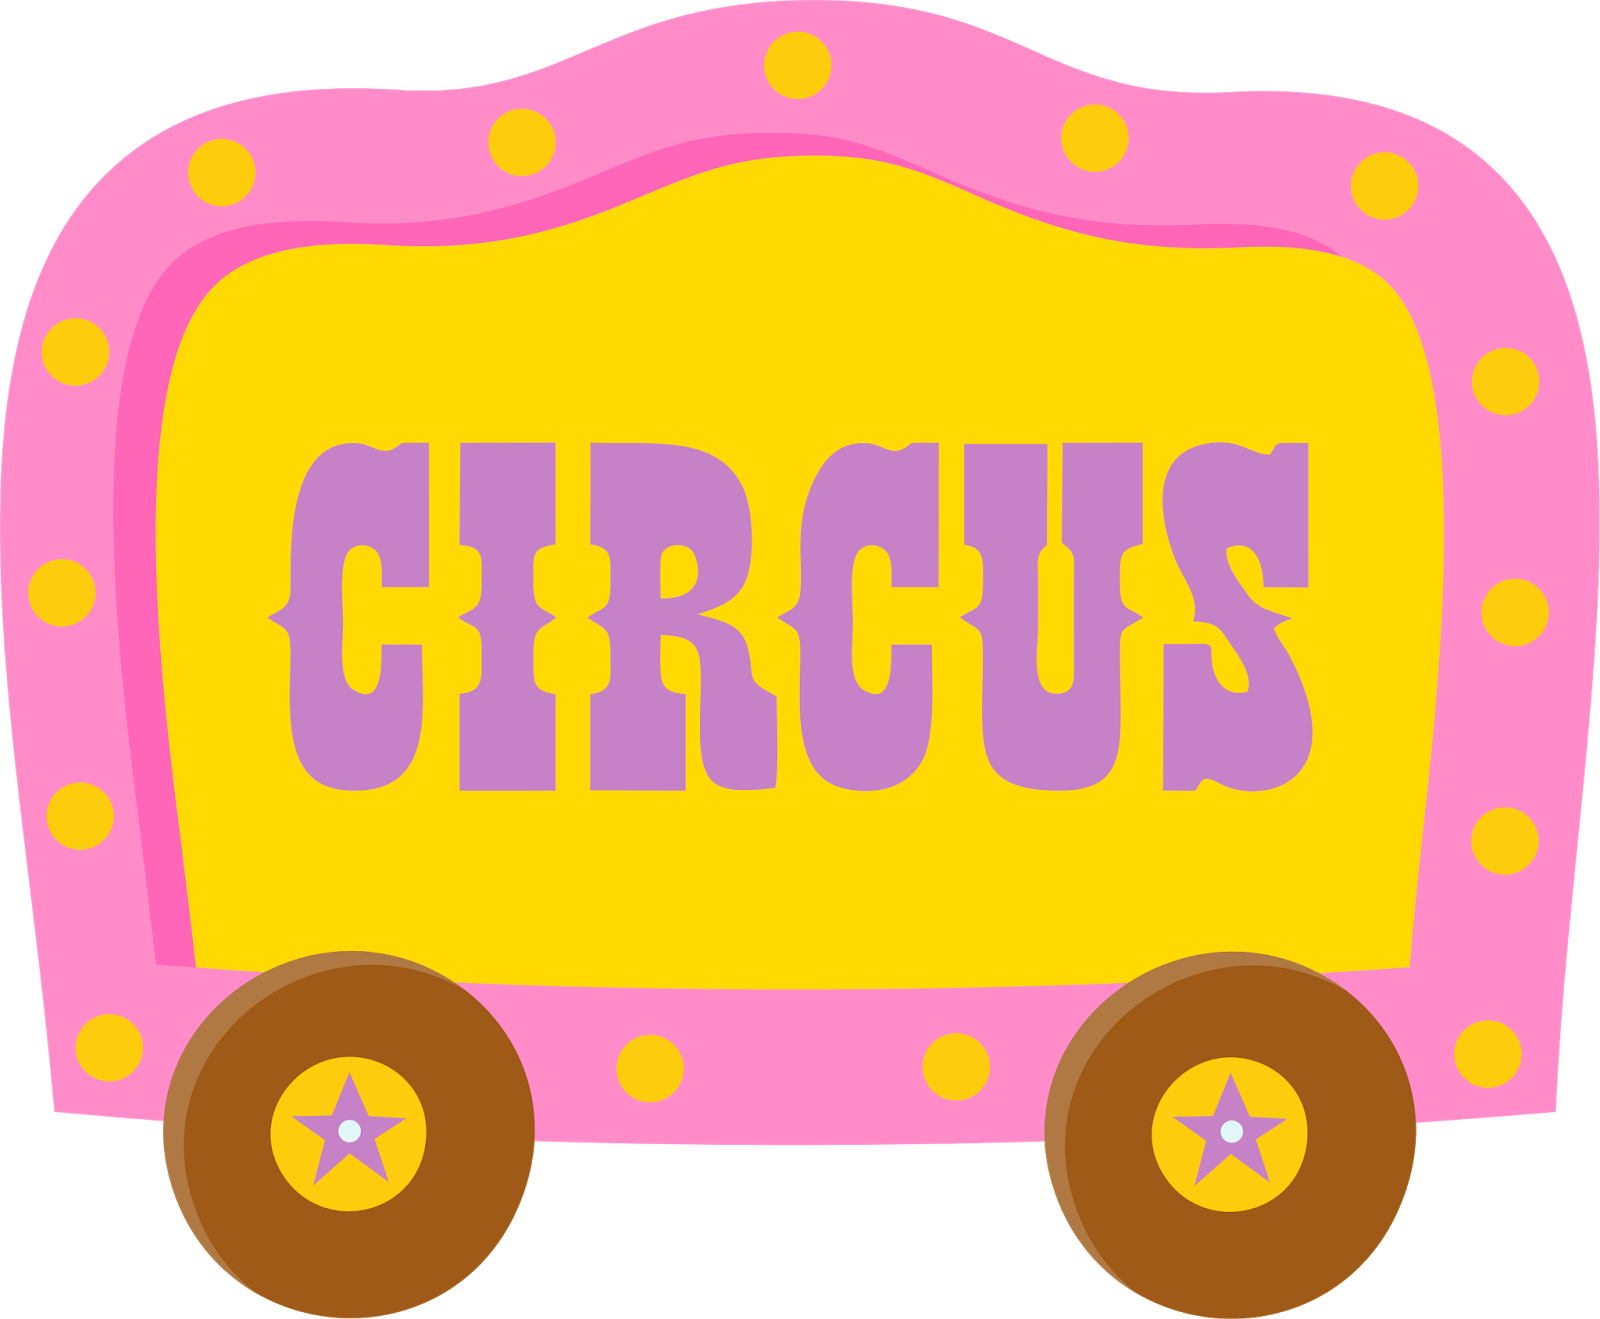 Circus Party, Circus Theme, Clown Party, Circus Clown, - Circus Train Cars Png (1600x1319)